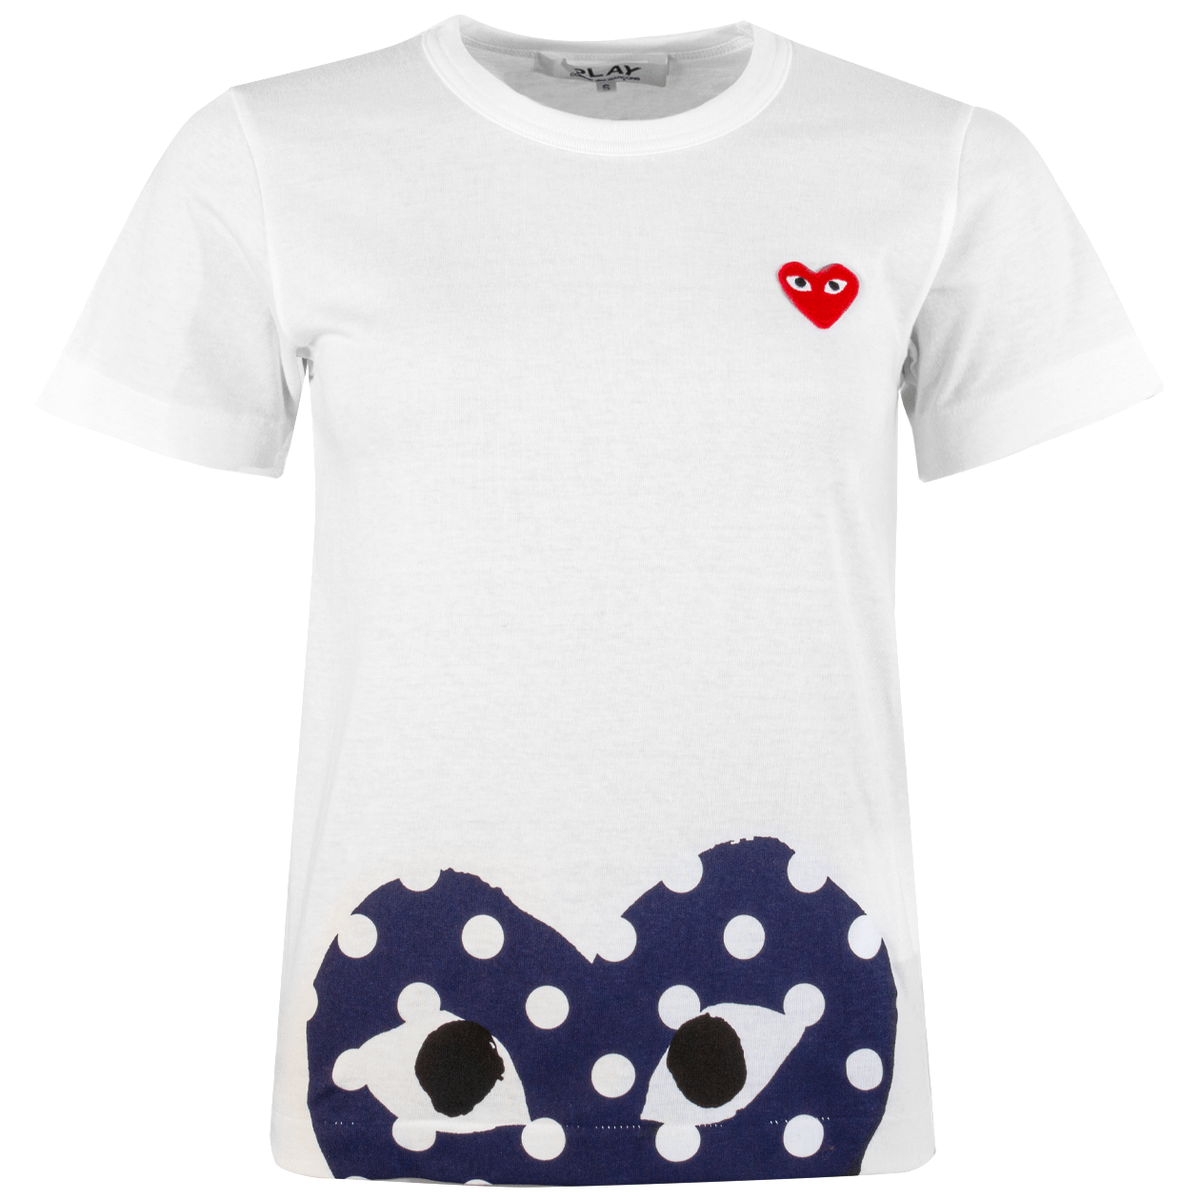 T235 Polka Dot Heart Logo T-shirt S White